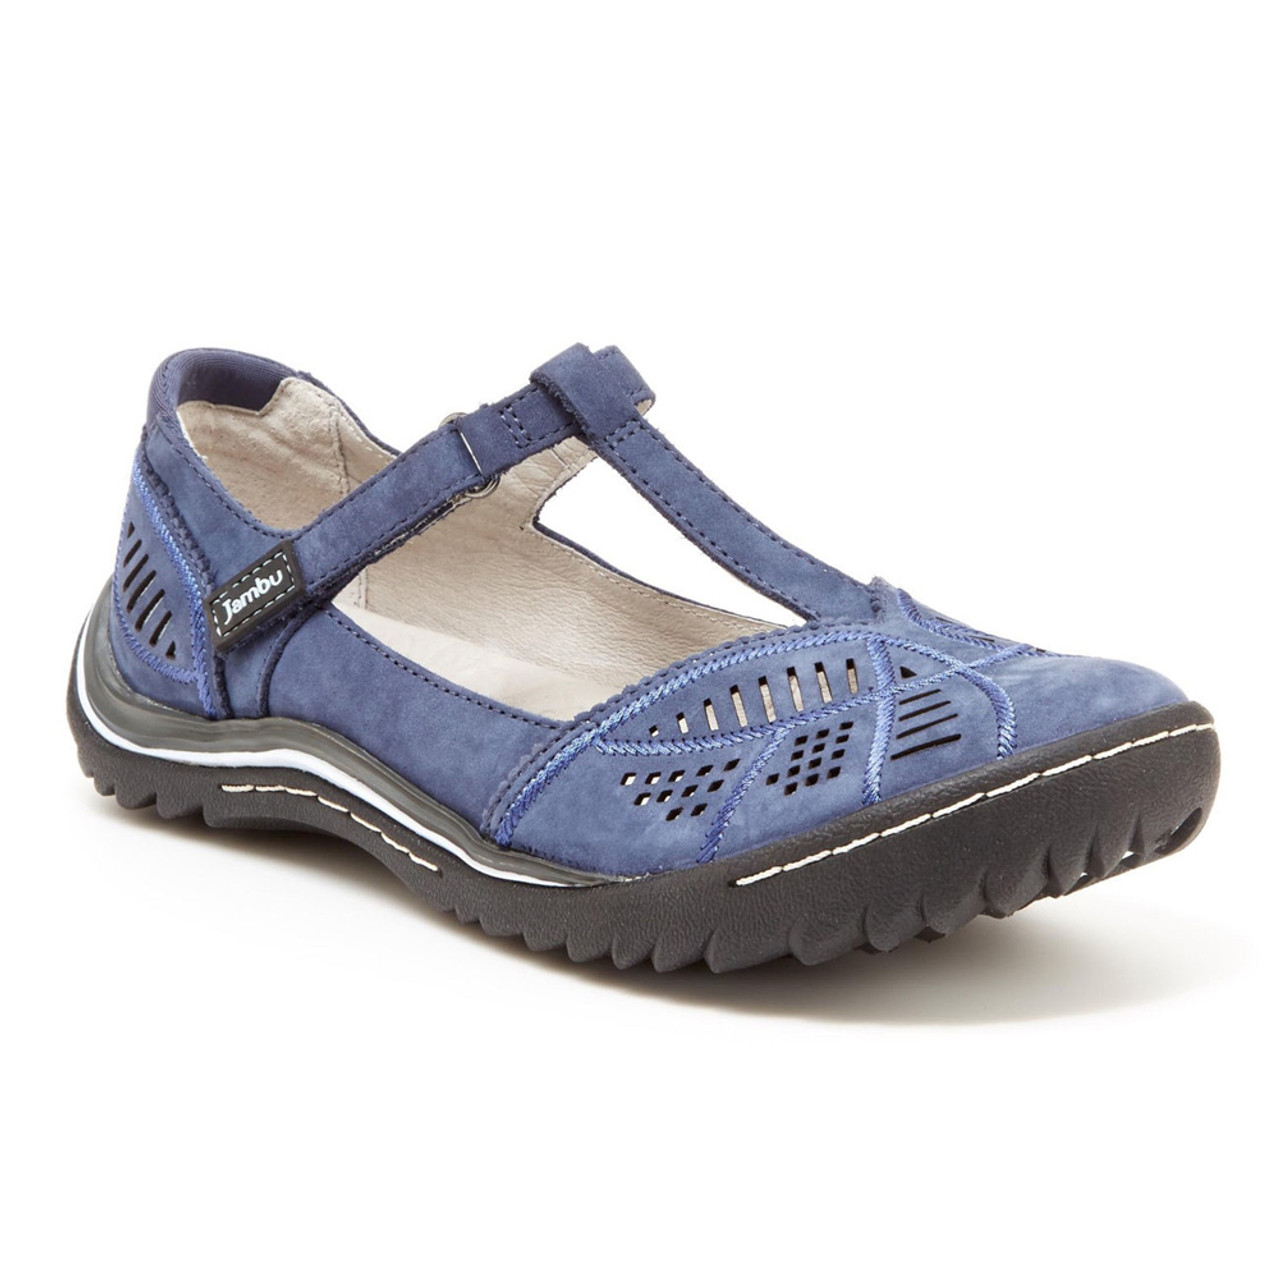 Jambu Women's Bridget Flat - Blue | Discount Jambu Ladies Shoes & More ...